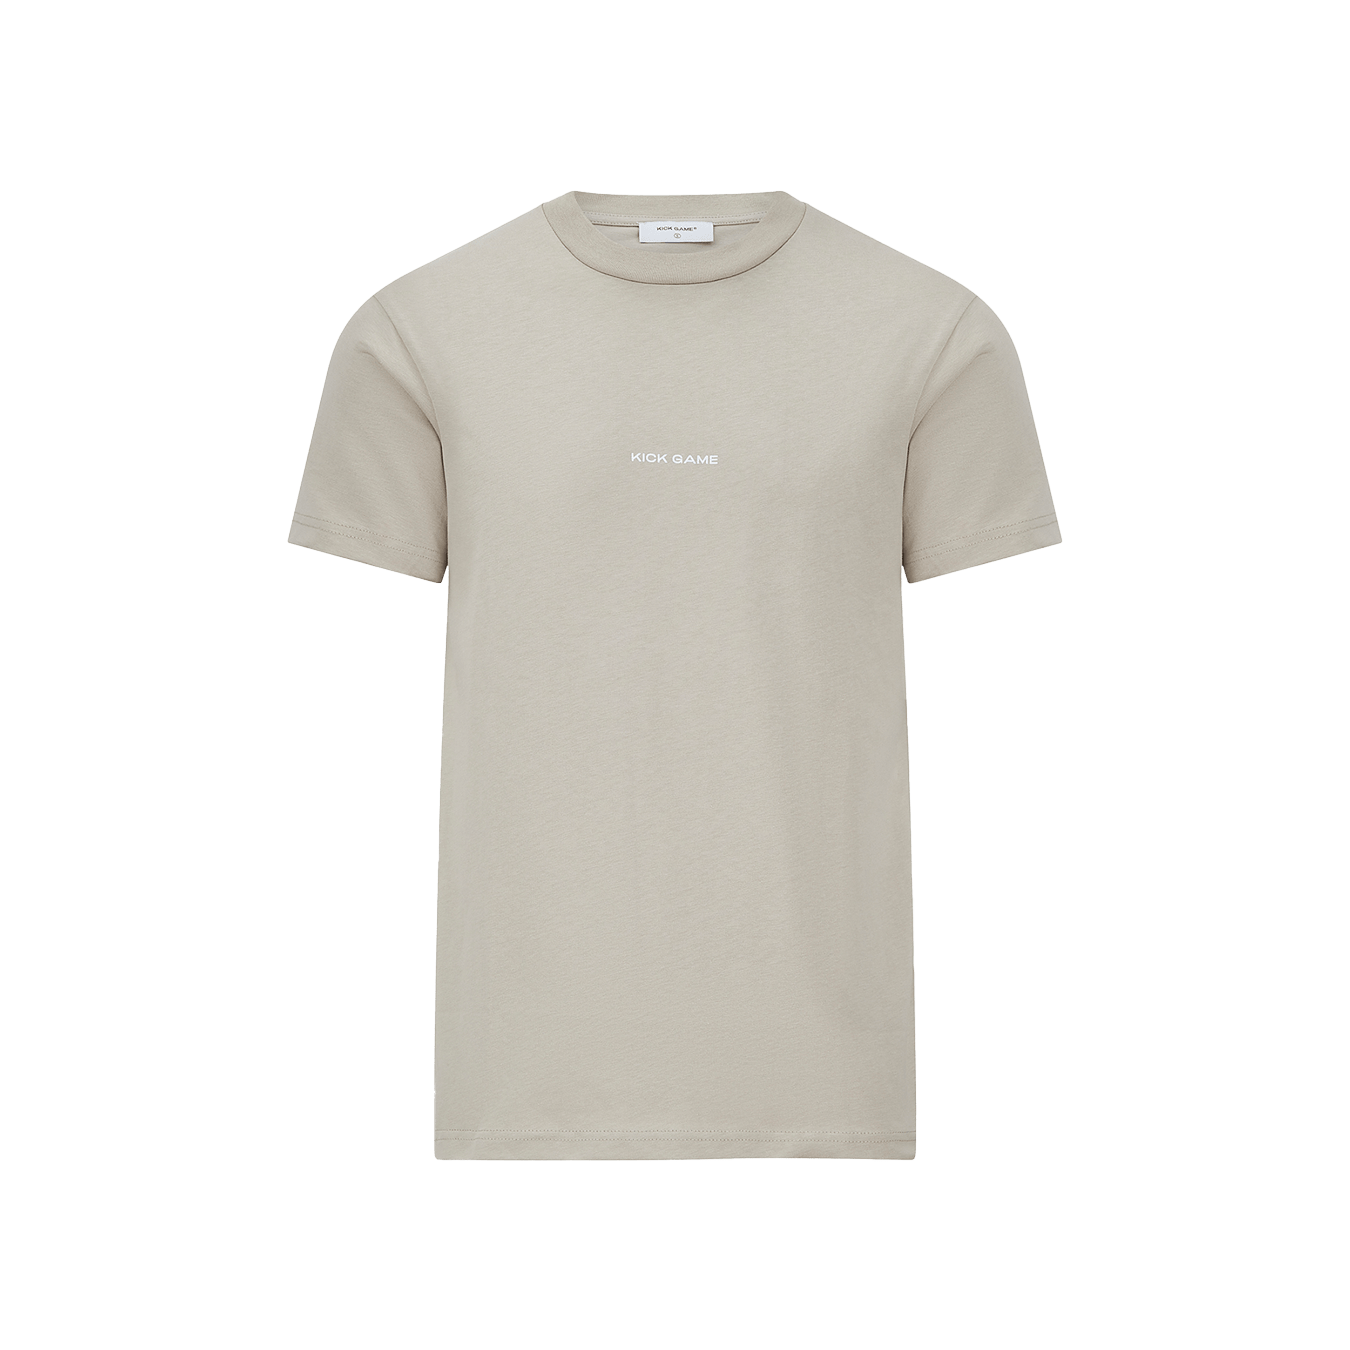 Vintage St. Louis Baseball Player Short Sleeve Unisex T-Shirt - Ivory